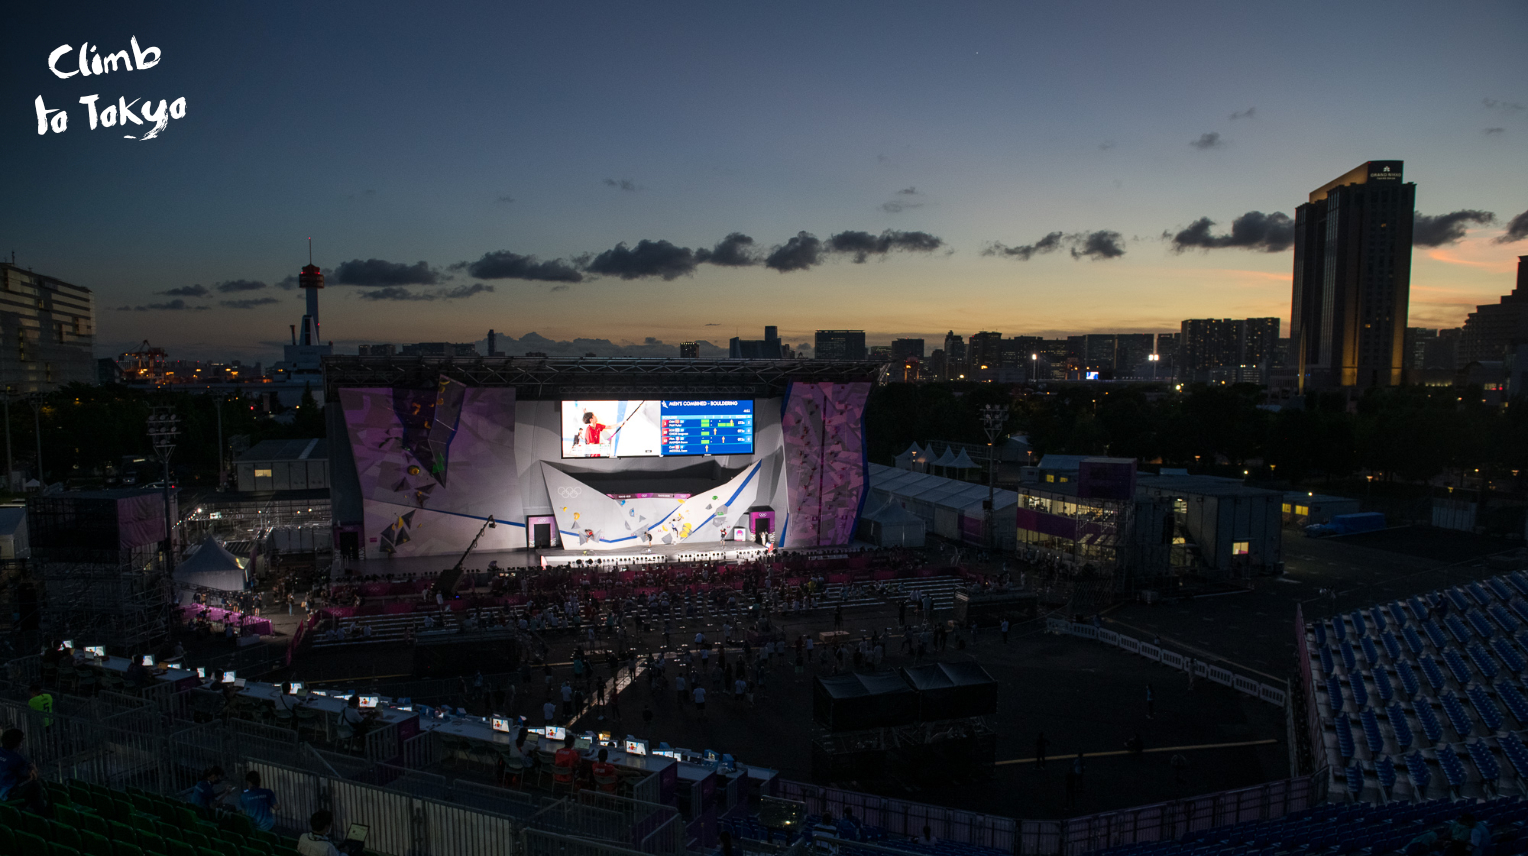  в Токио на спортивной арене в Aomi Urban Sports Park прошла мужская квалификация в рамках XXXII летних Олимпийских игр.